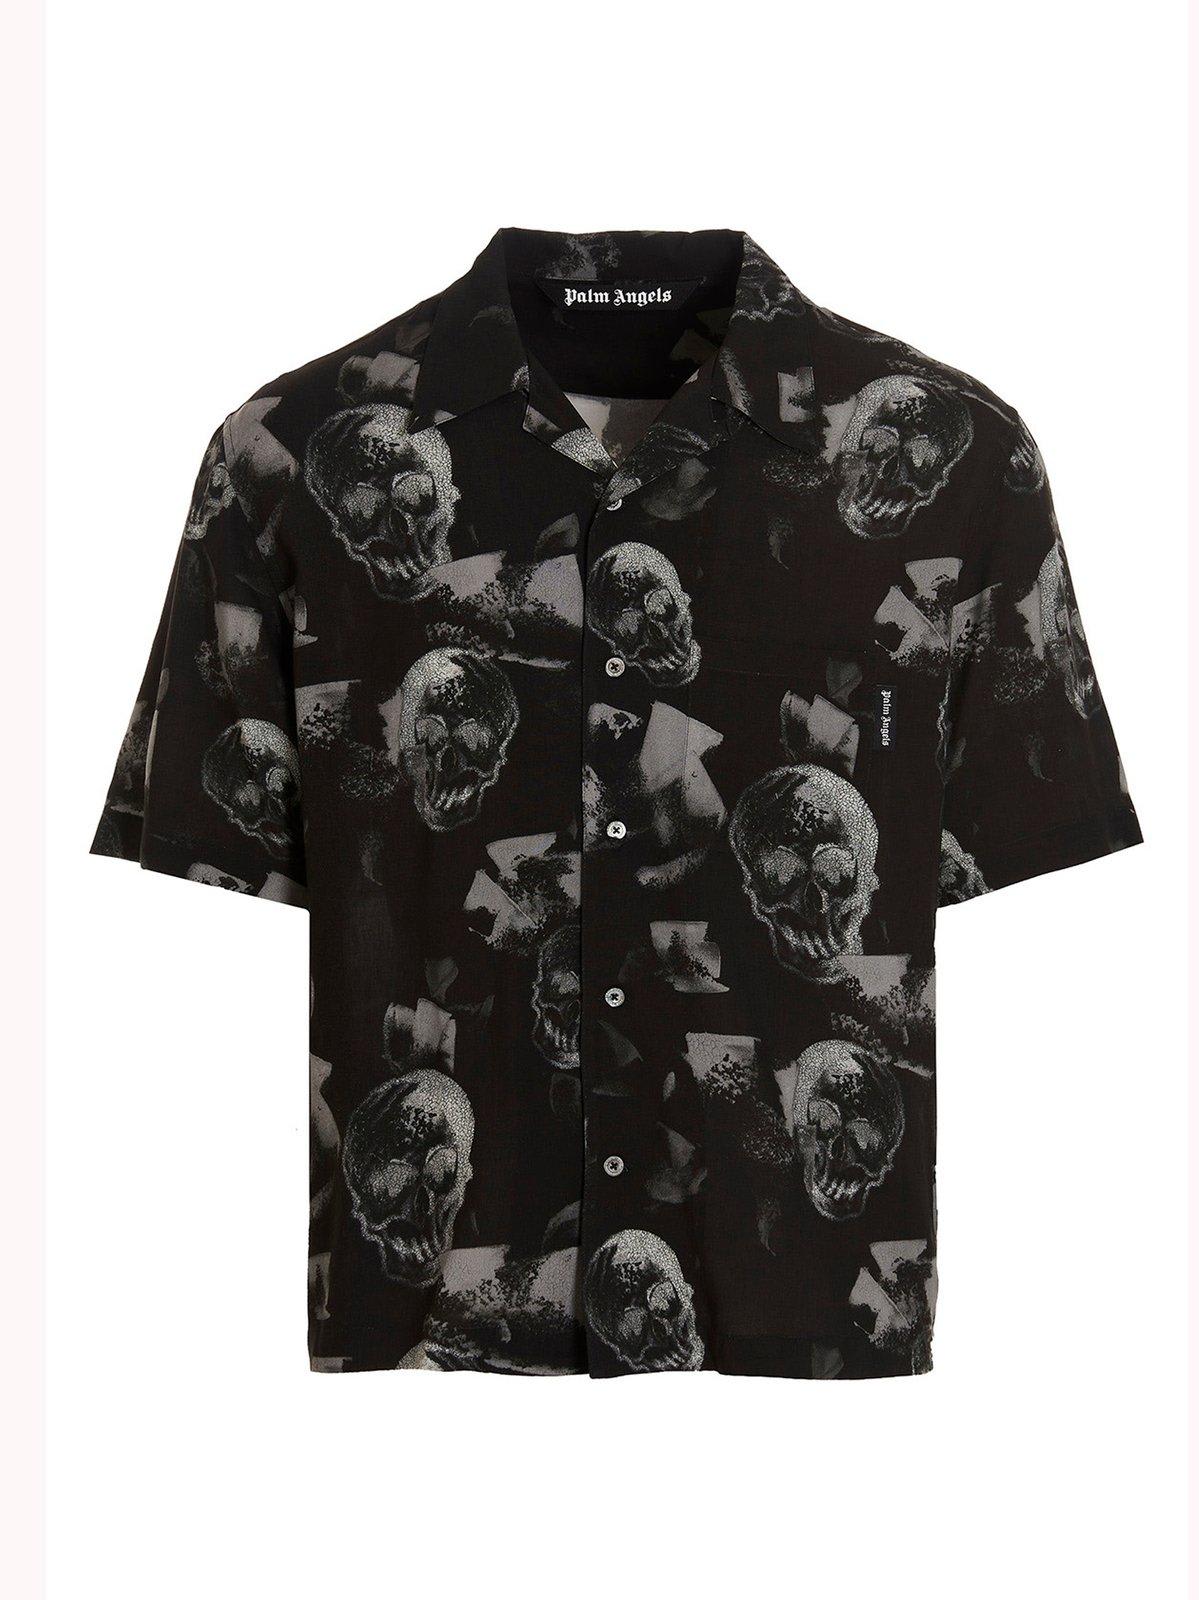 Palm Angels Skull-printed Short-sleeved Shirt